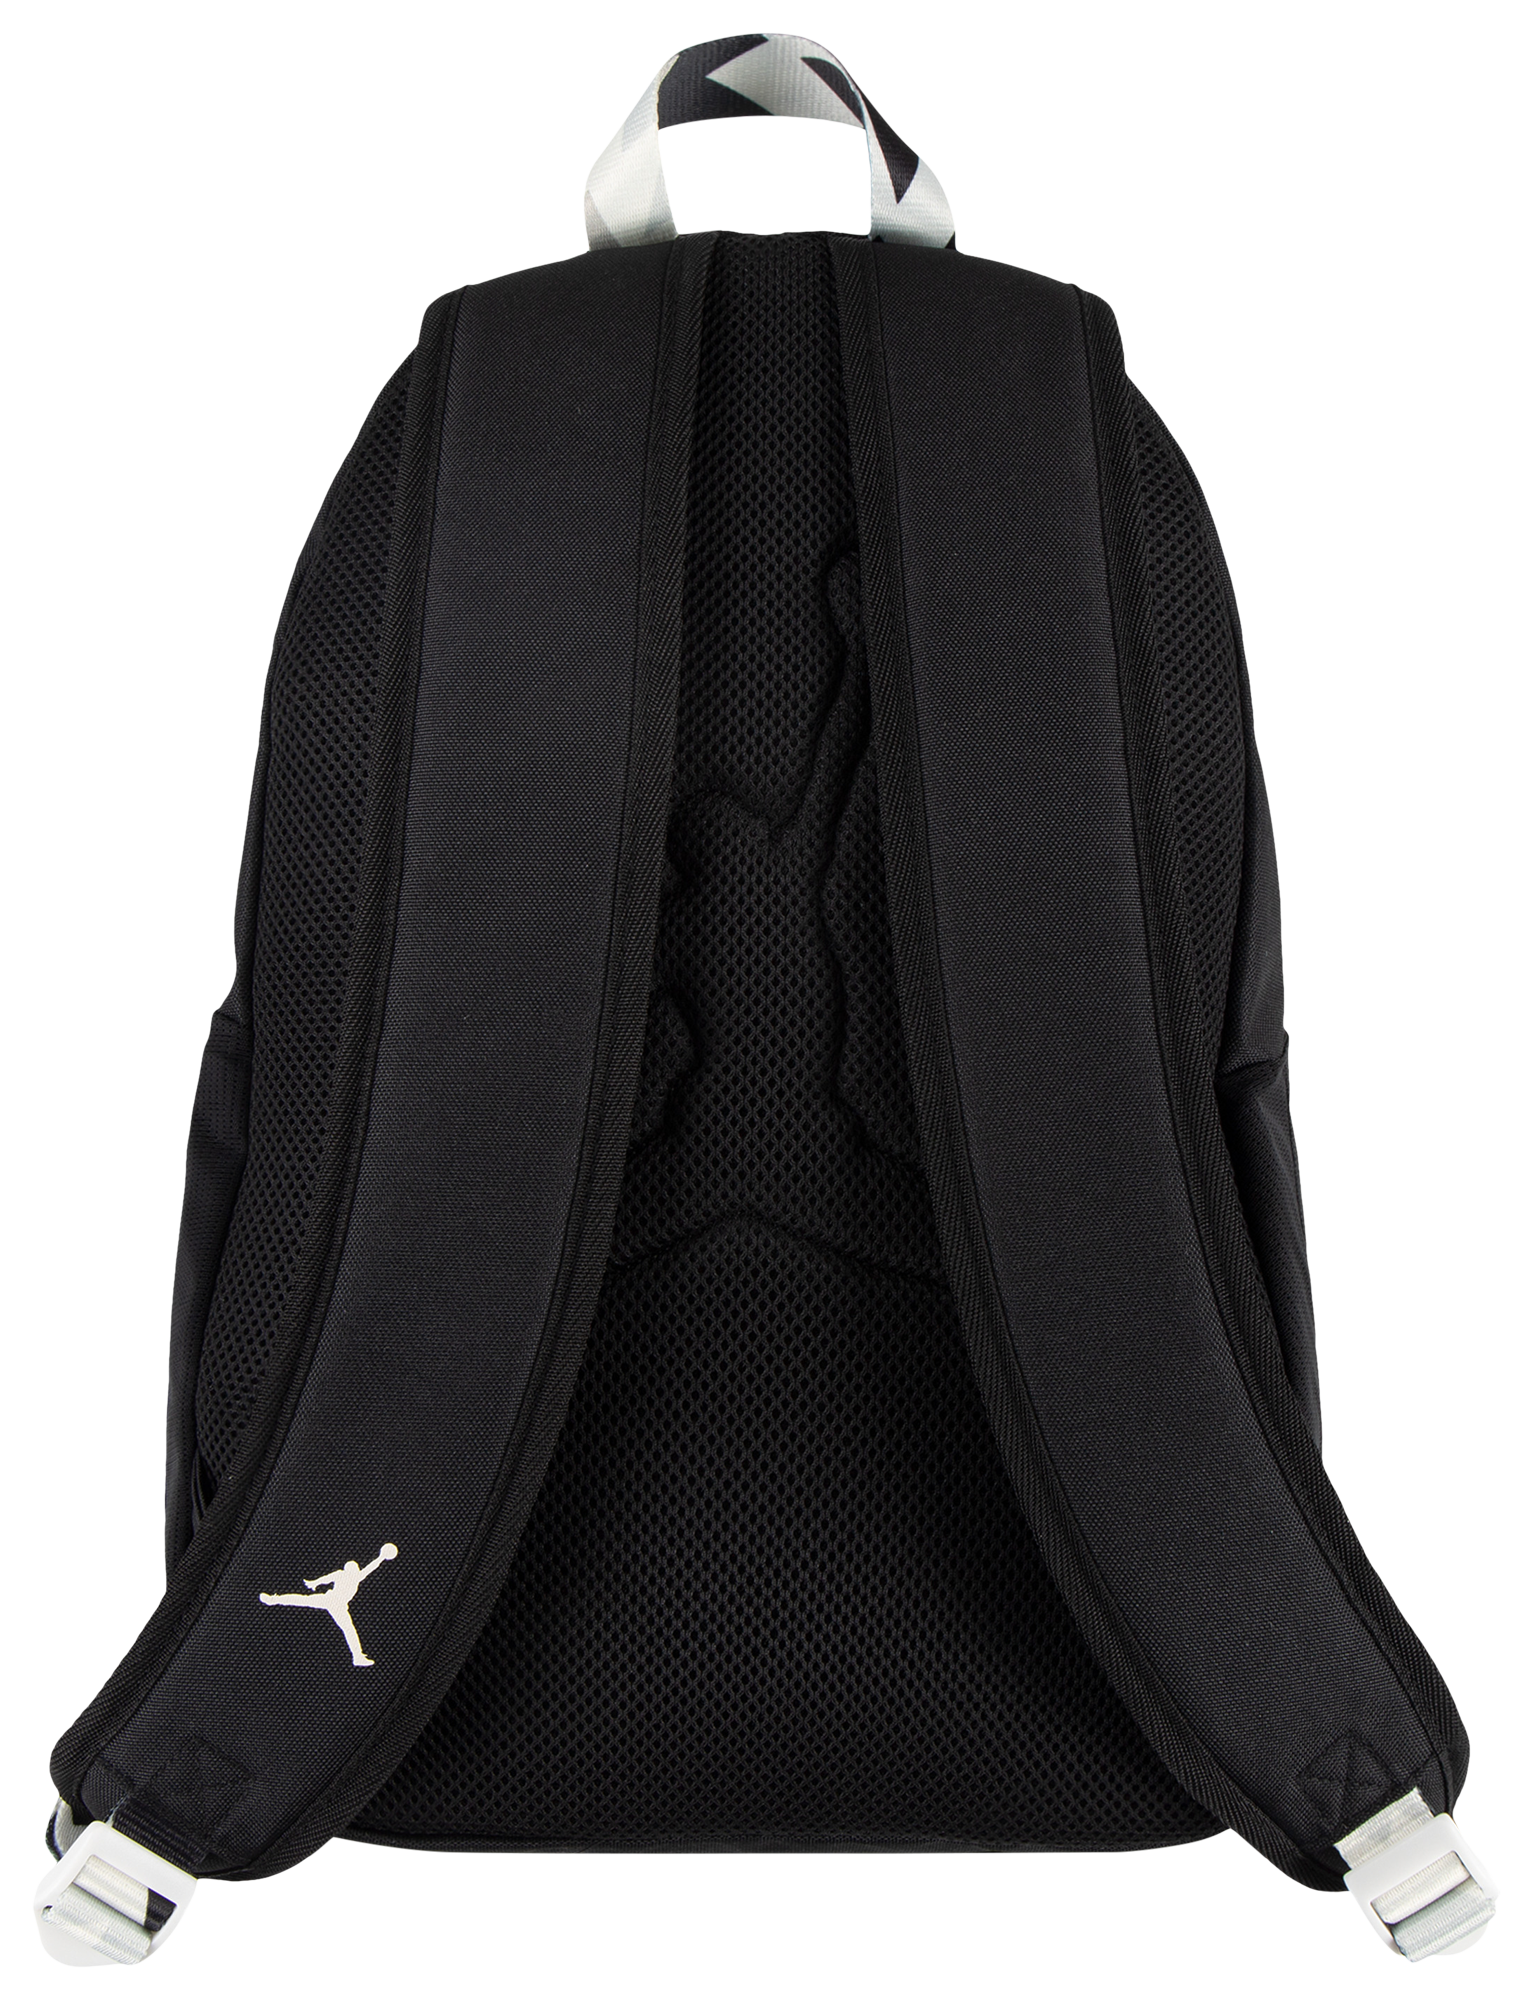 Jordan MVP Backpack